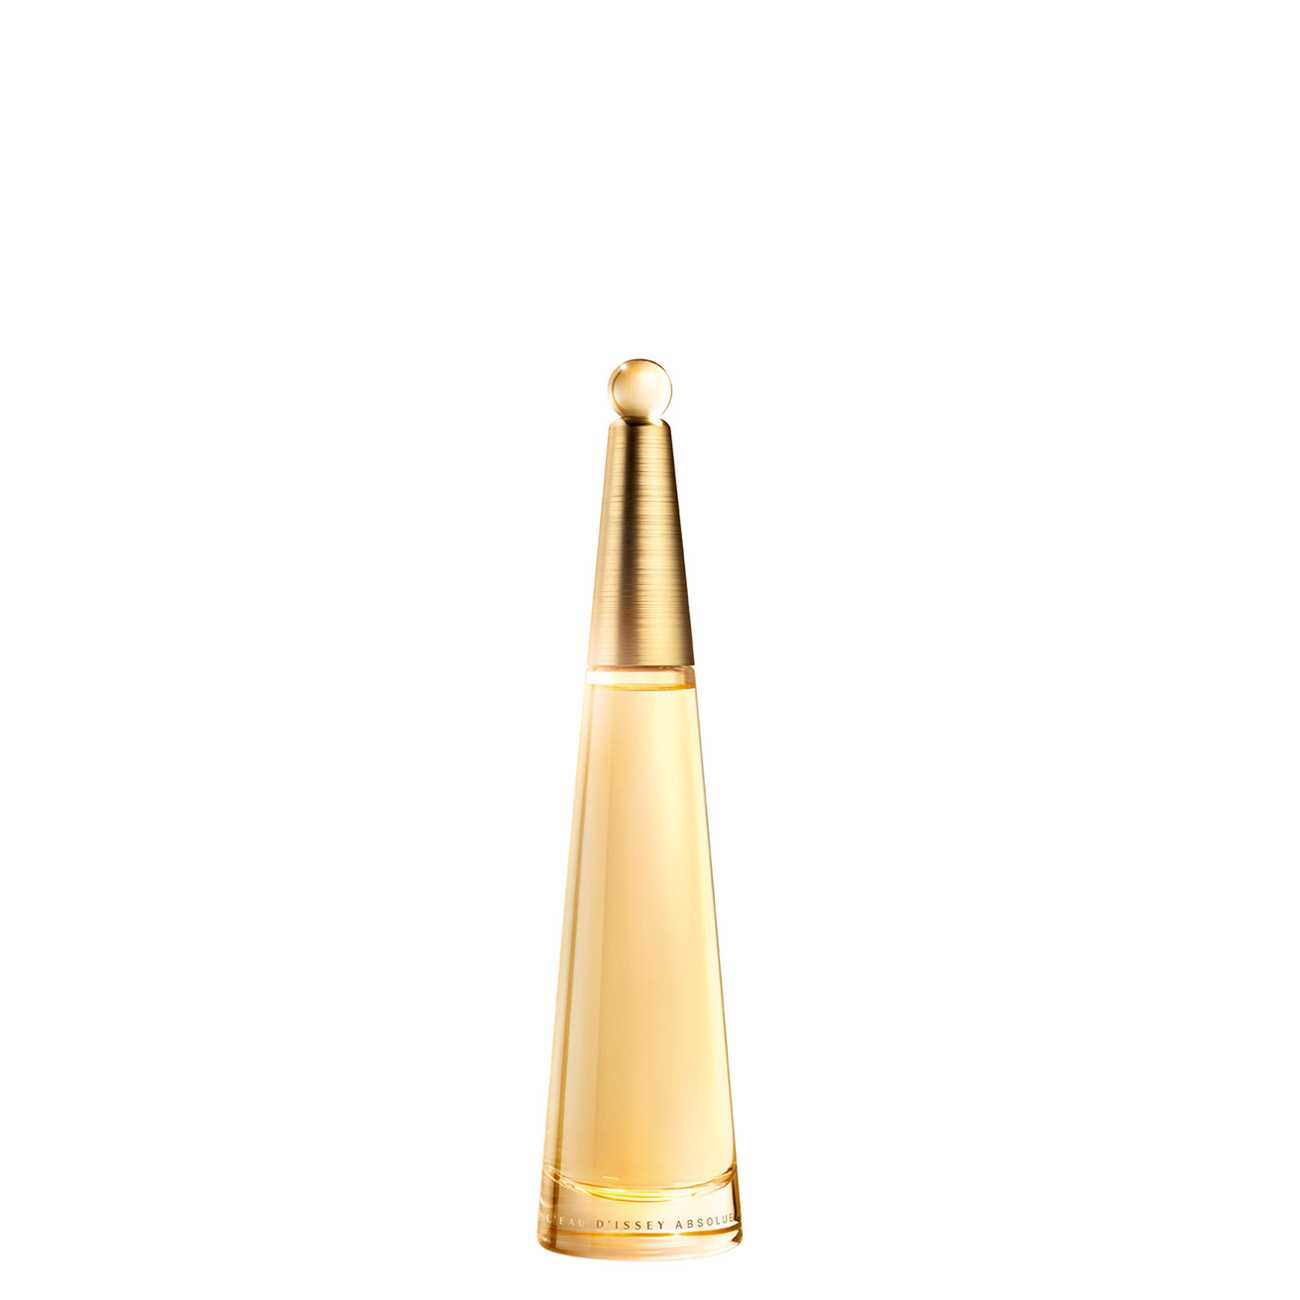 Apa de Parfum Issey Miyake L'EAU D'ISSEY ABSOLUE 50 ML 50ml cu comanda online